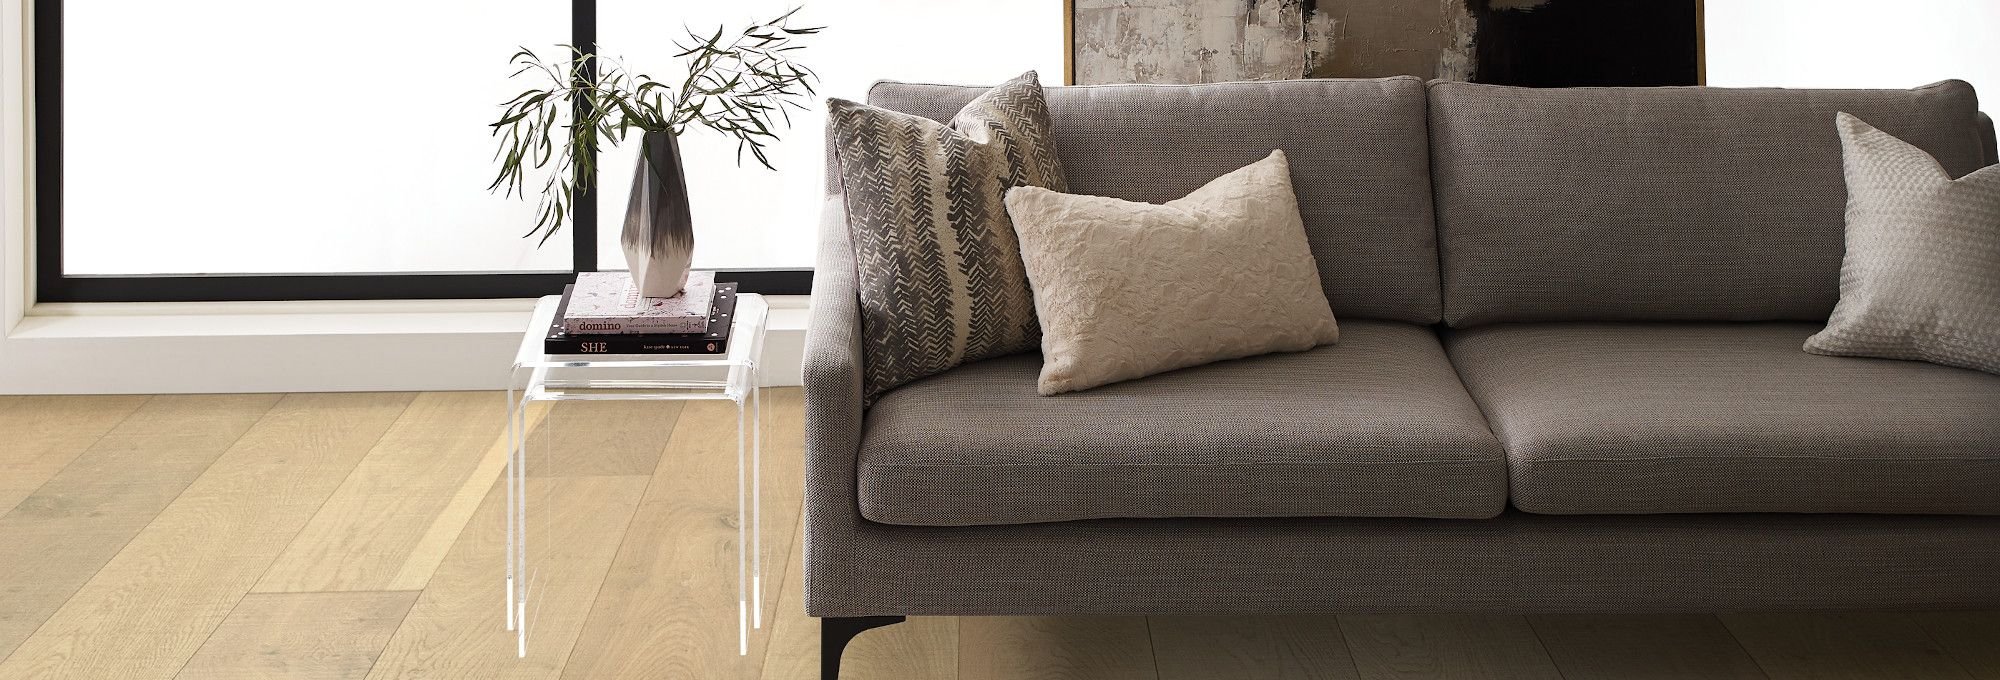 Brown couch on light brown hardwood floor from Carpet Studio & Design Inc. in Los Angeles, CA